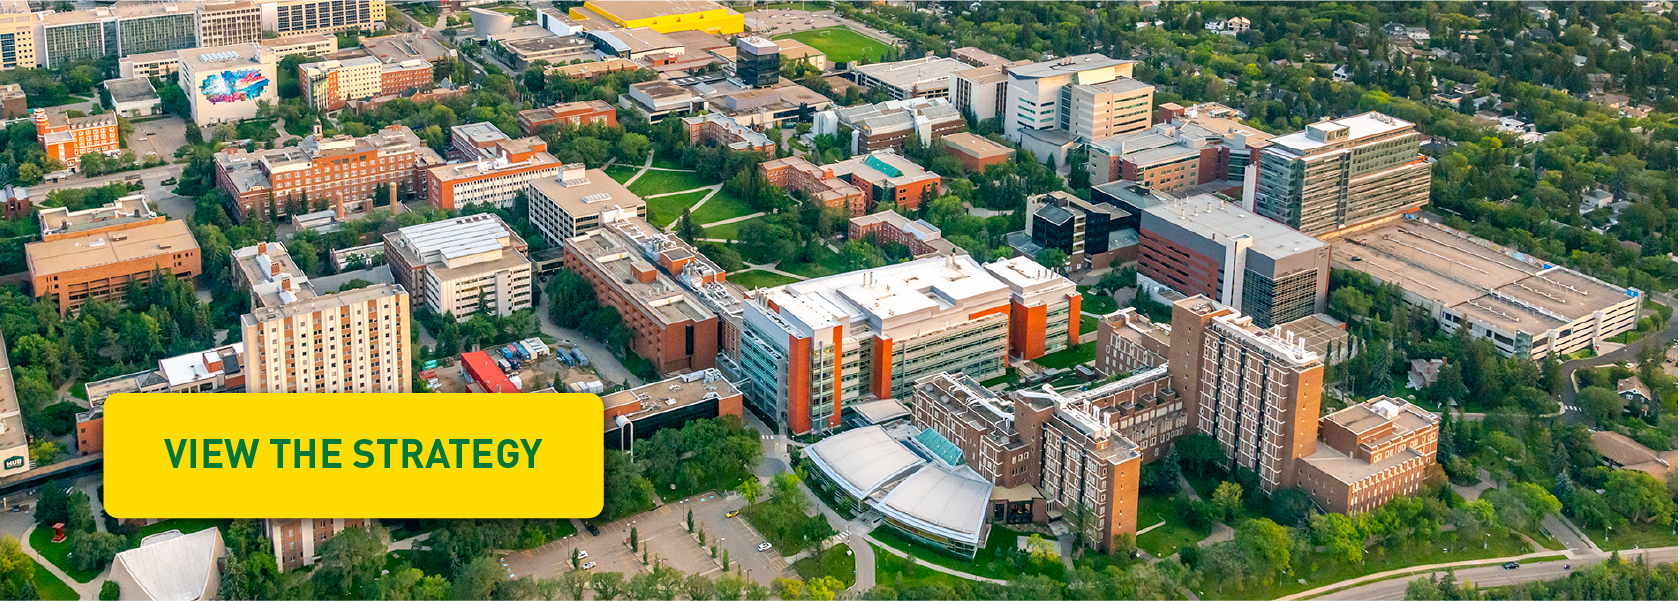 Aerial view of University of Alberta campus